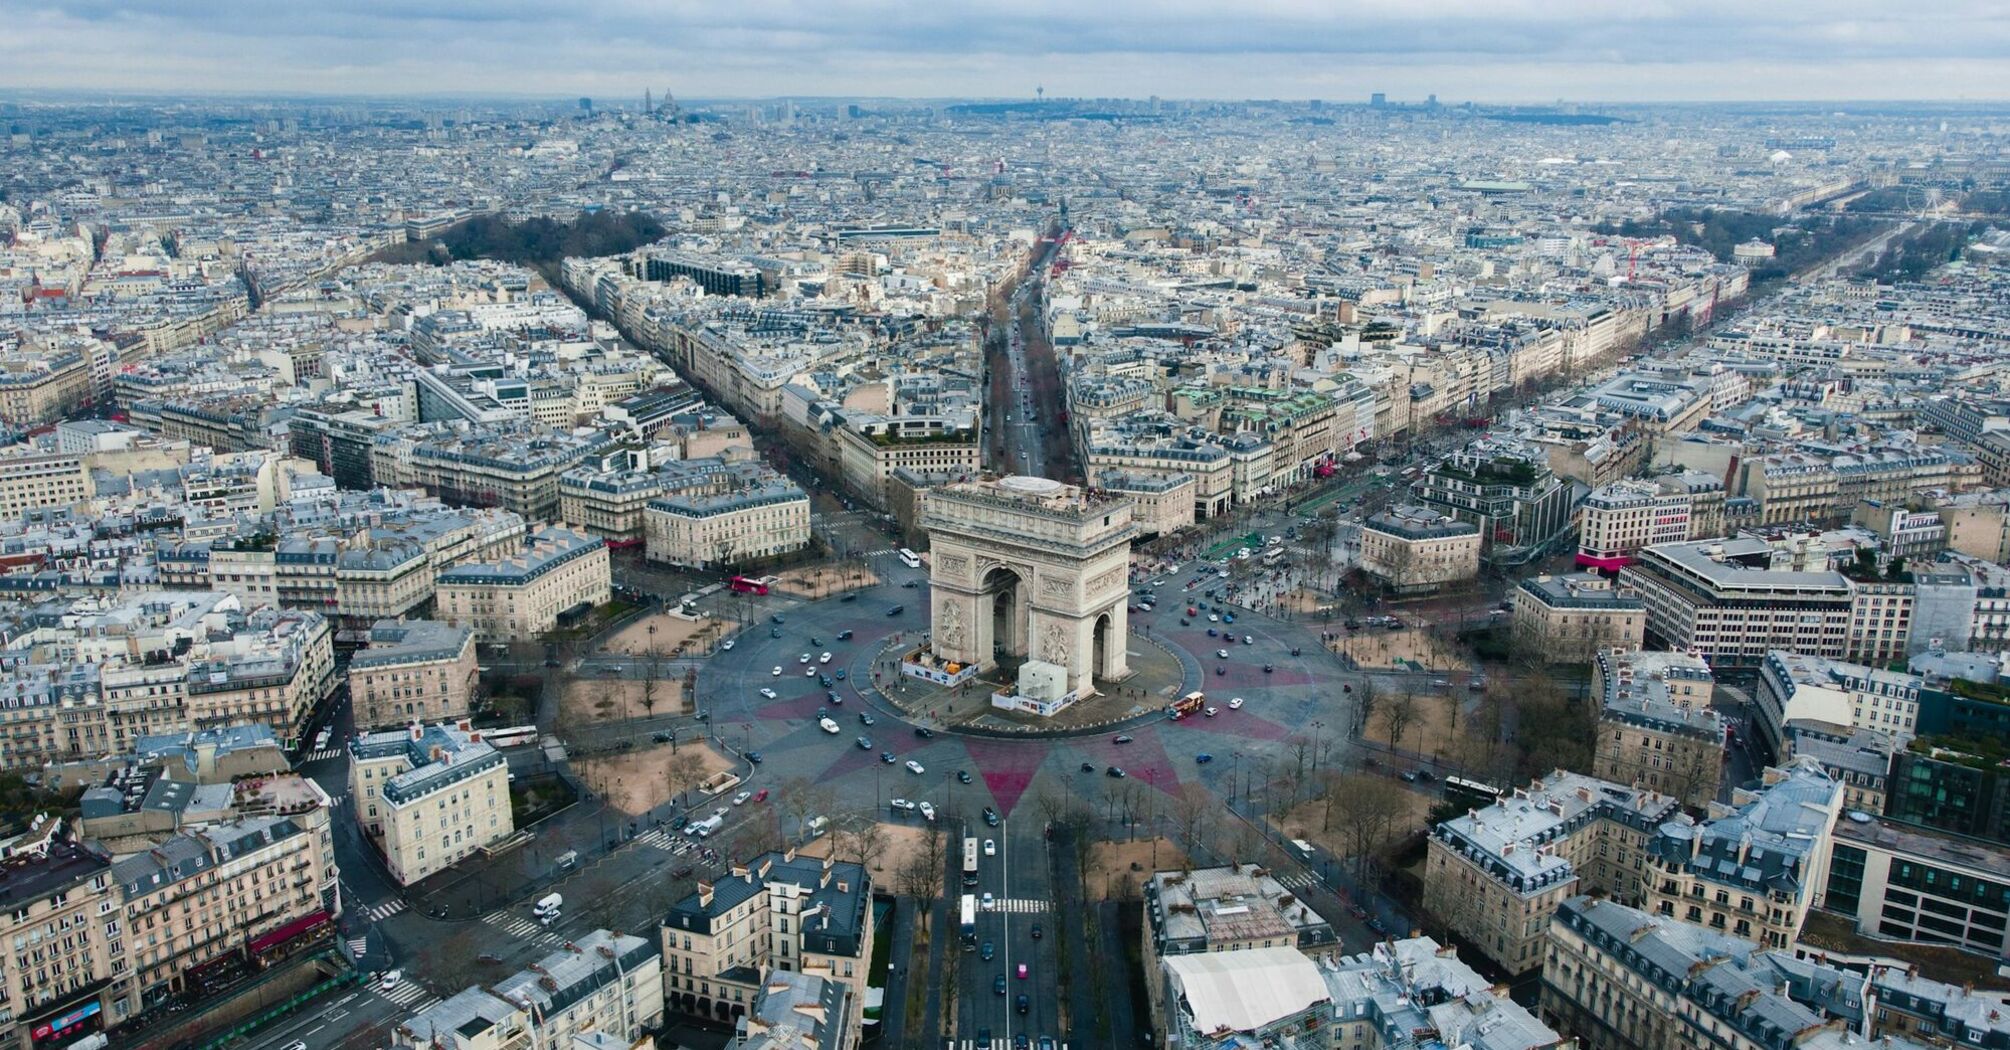 Aerial view of Paris with the Arc de Triomphe